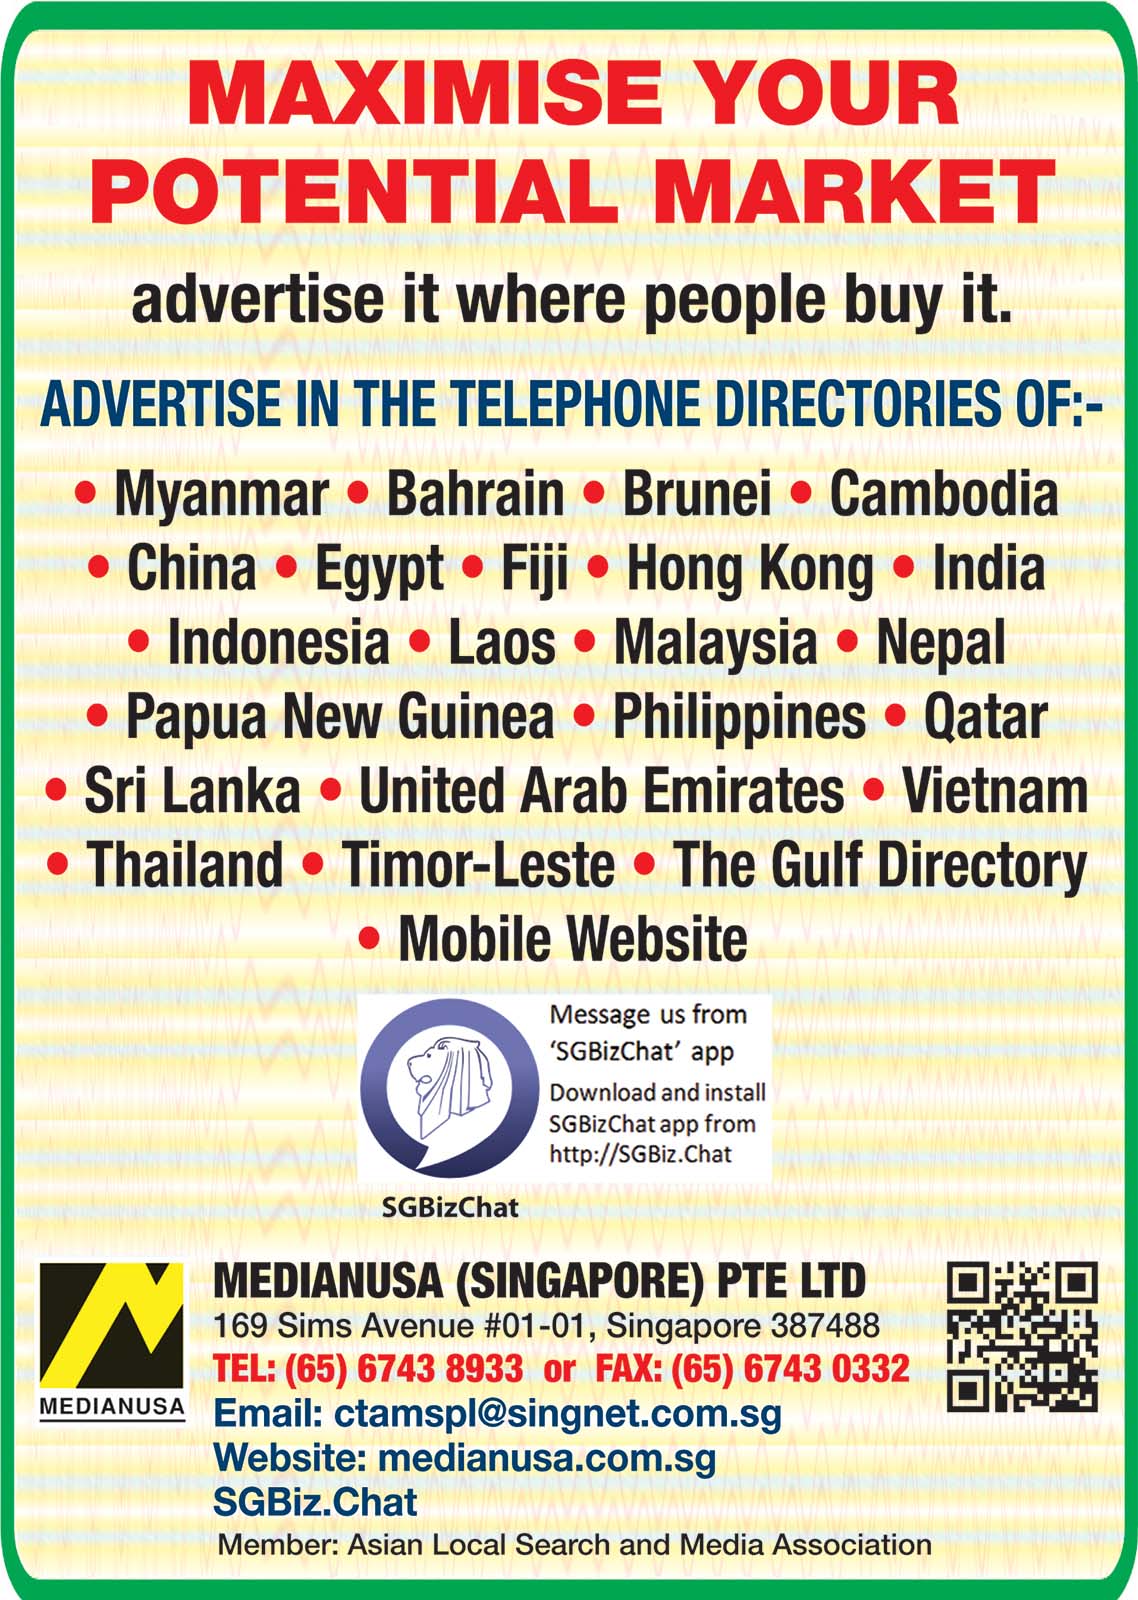 Medianusa (Singapore) Pte Ltd.